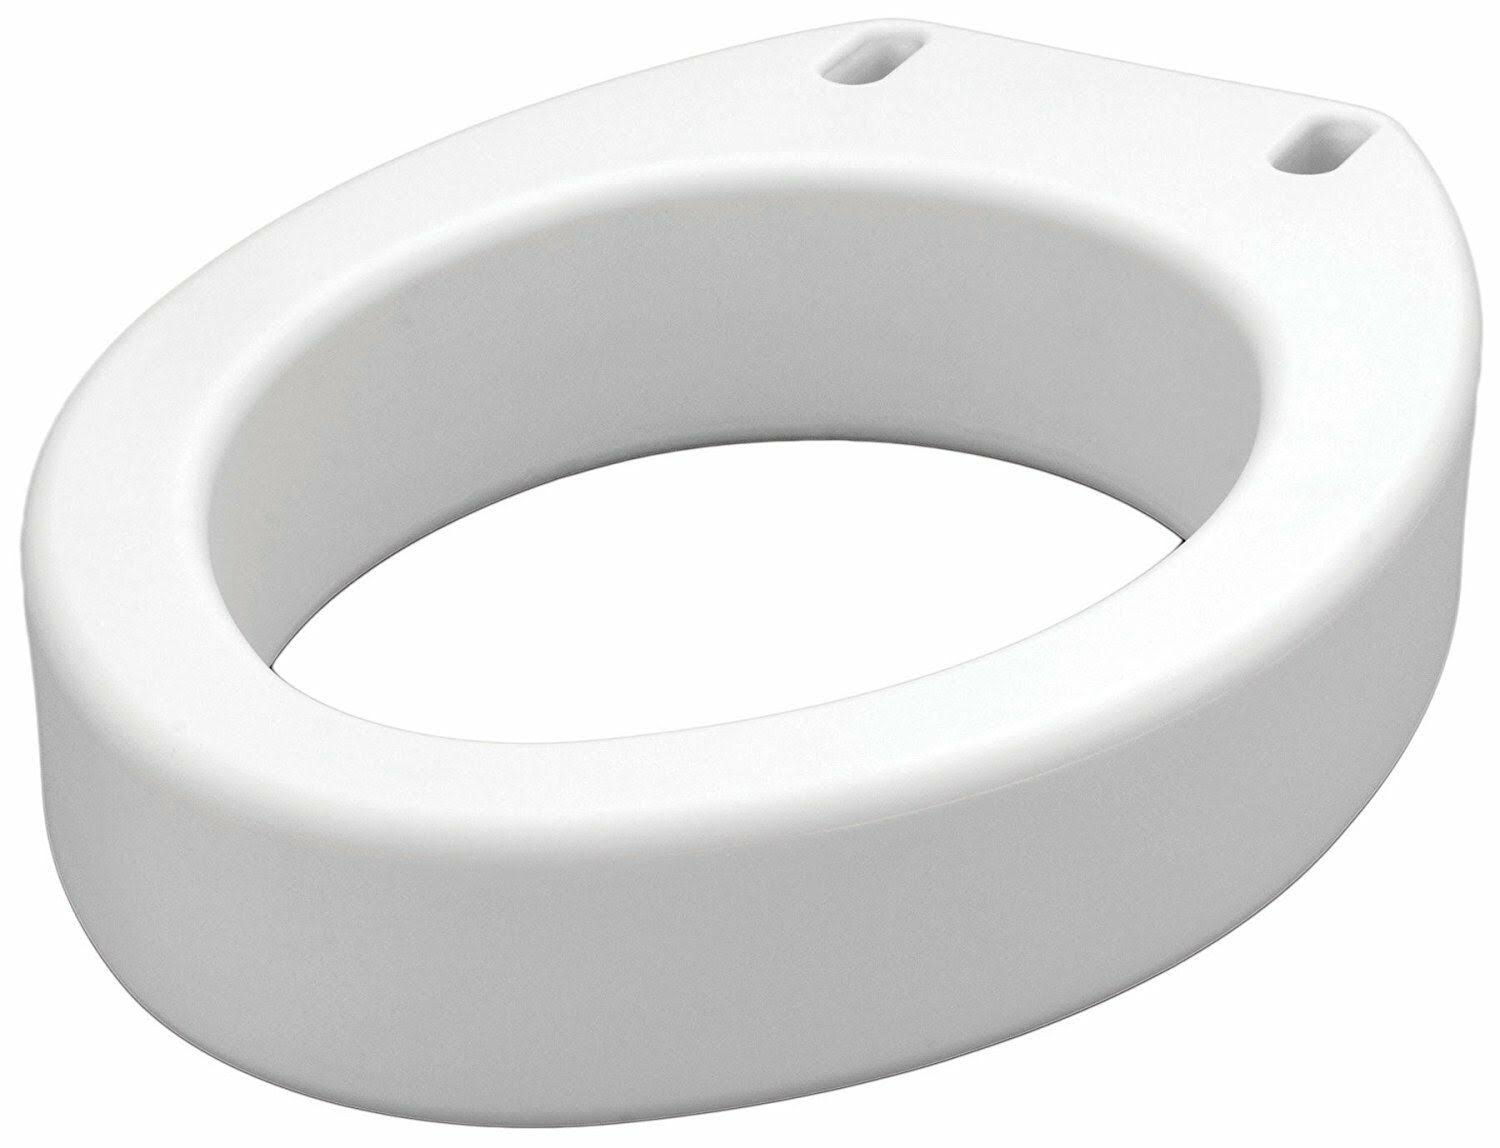 NOVA Medical Products Toilet Seat Elevator - White, Standard, 3.5"